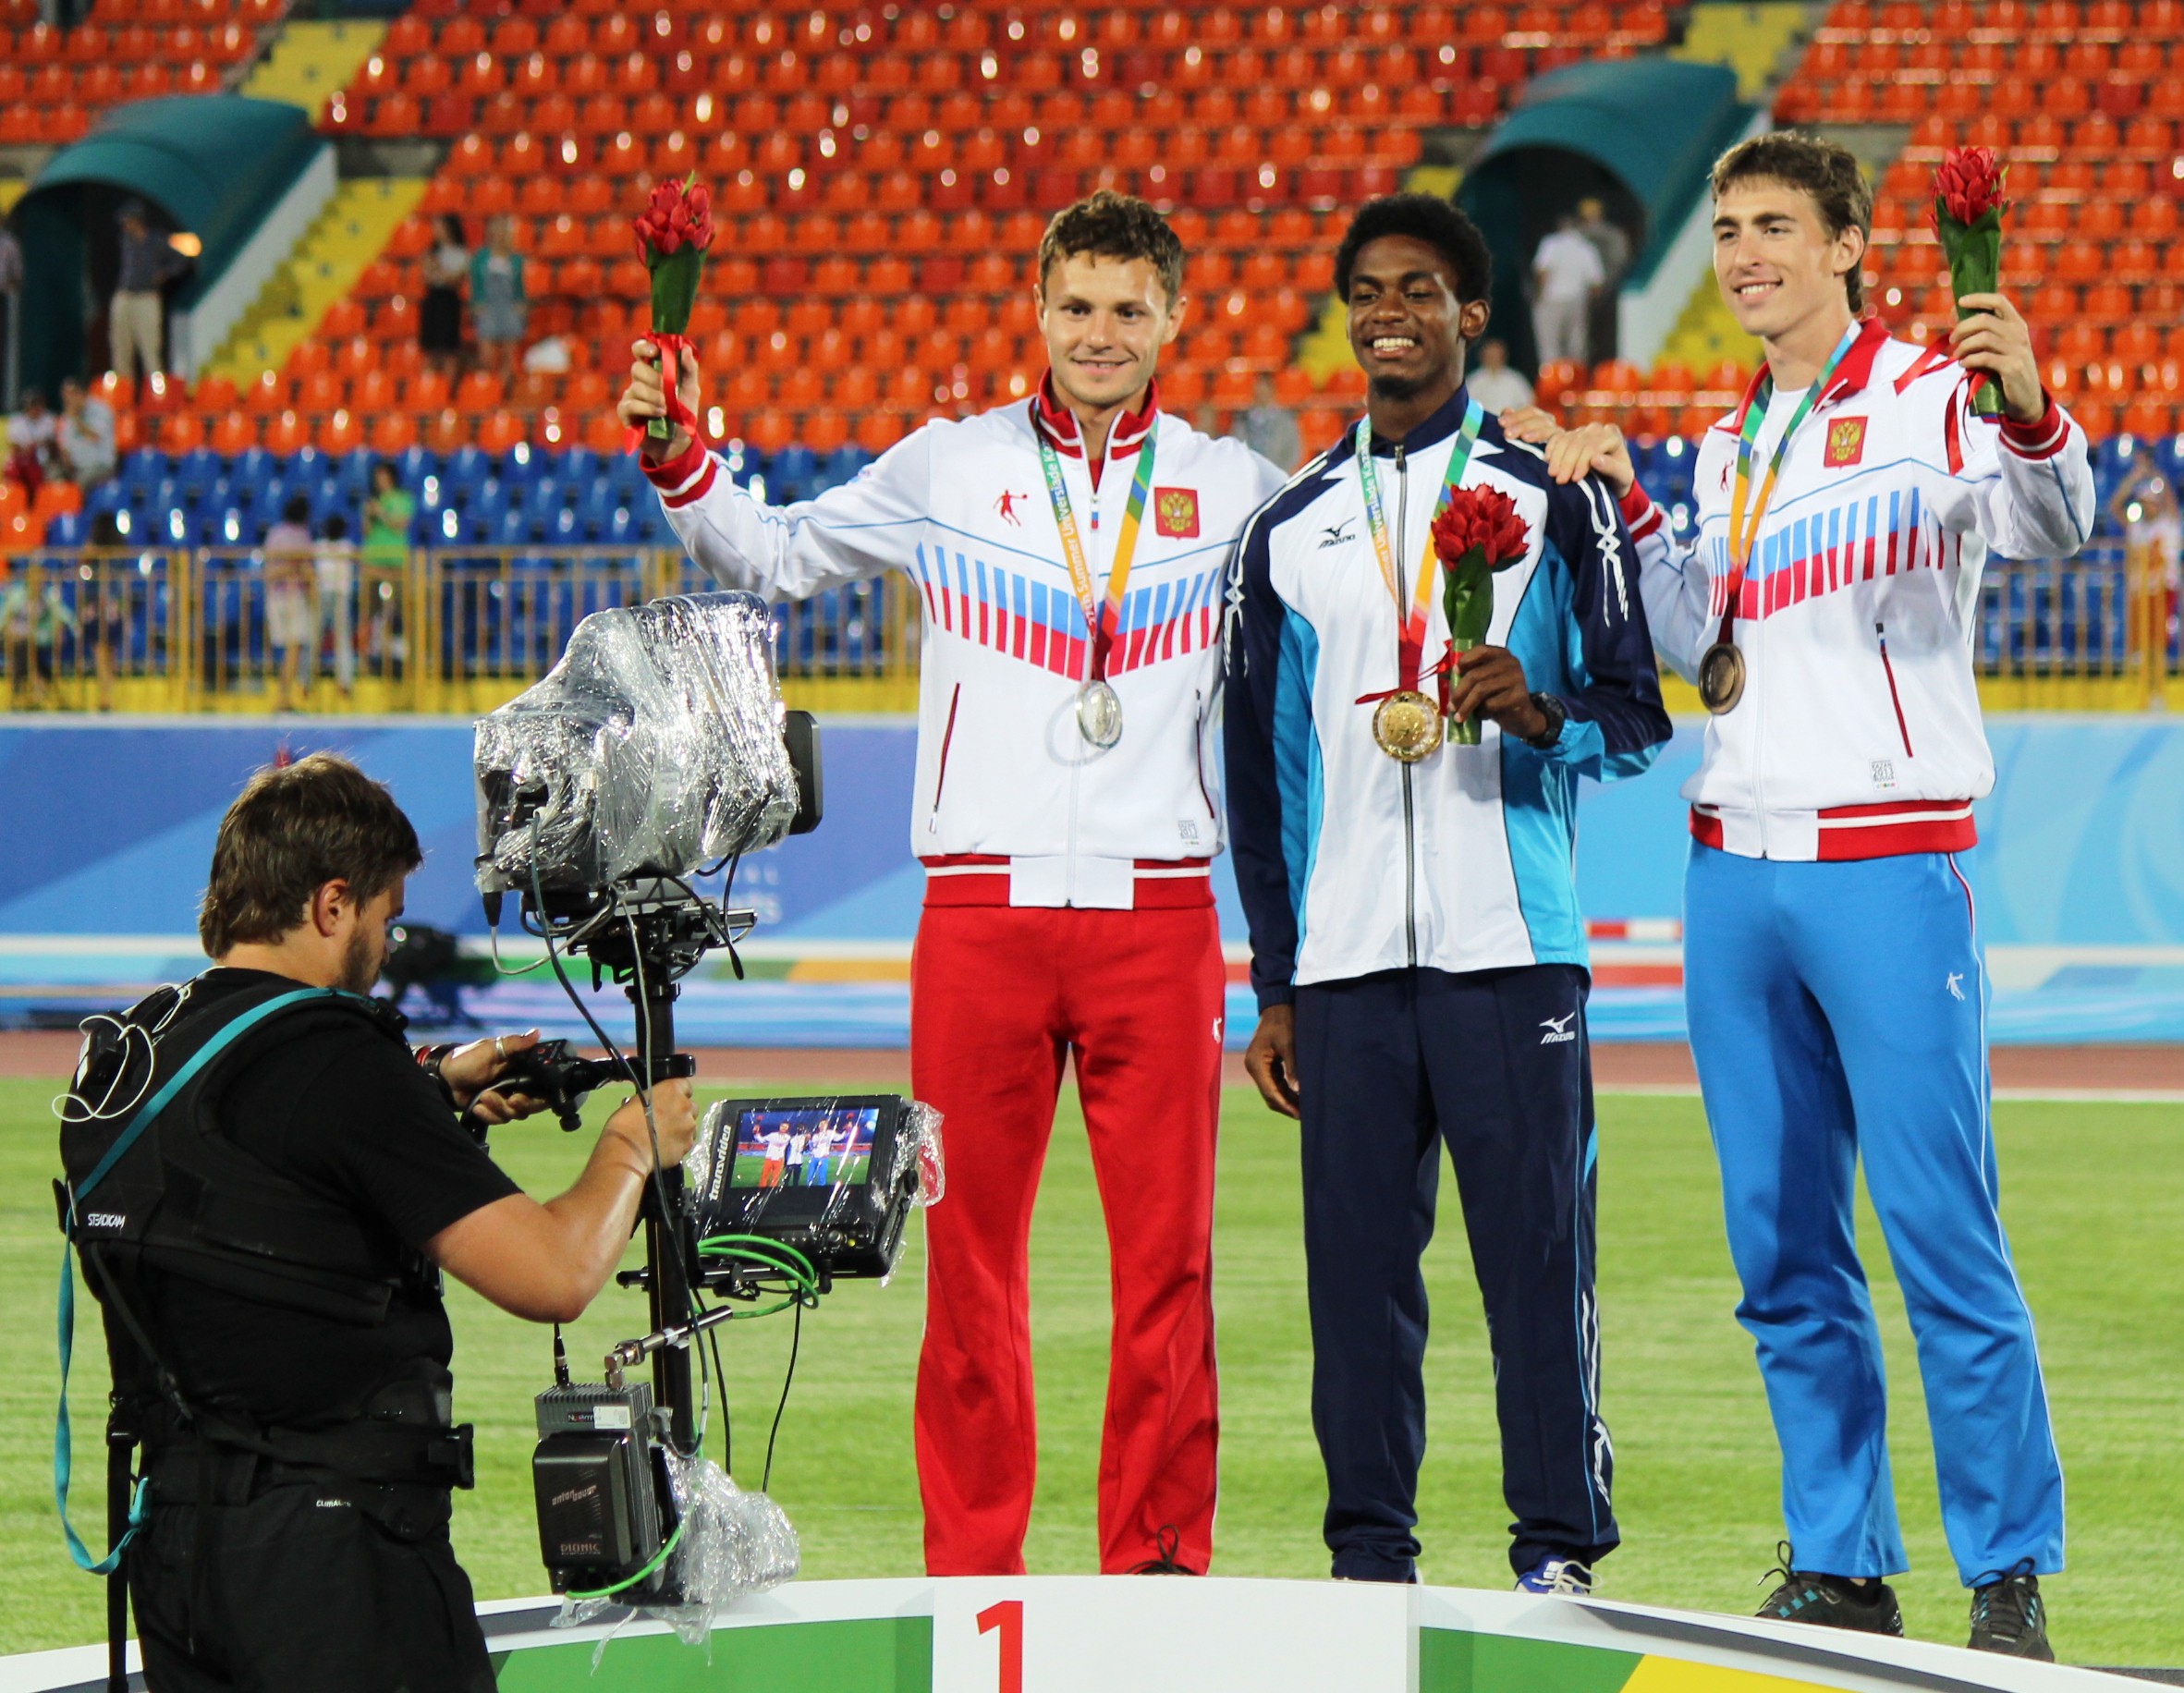 Eddie Lovett Wins Gold at World University Games in Russia